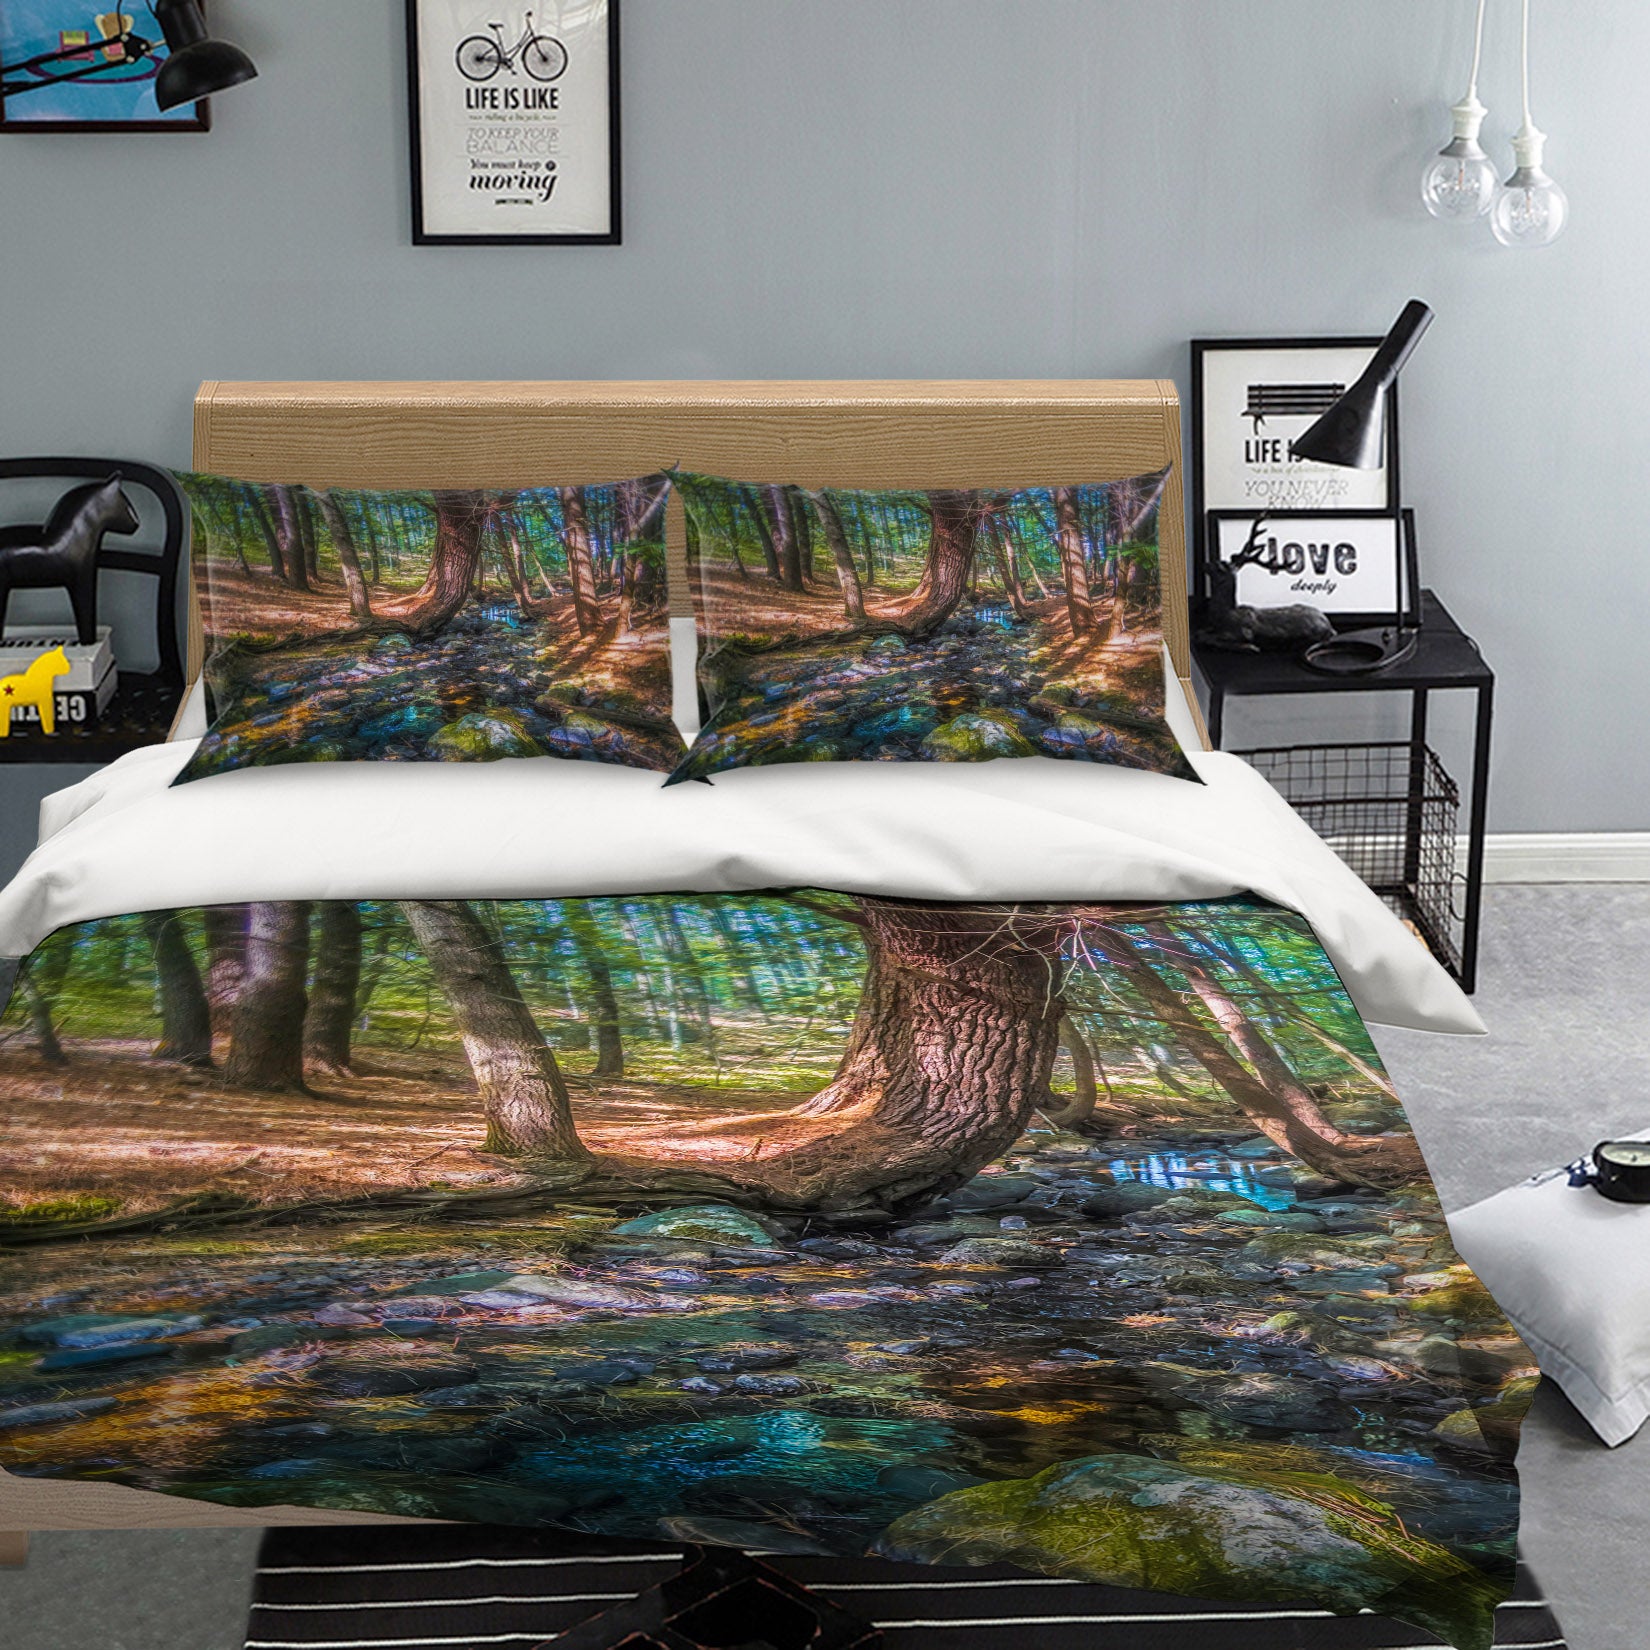 3D Parrish Woods 86008 Jerry LoFaro bedding Bed Pillowcases Quilt